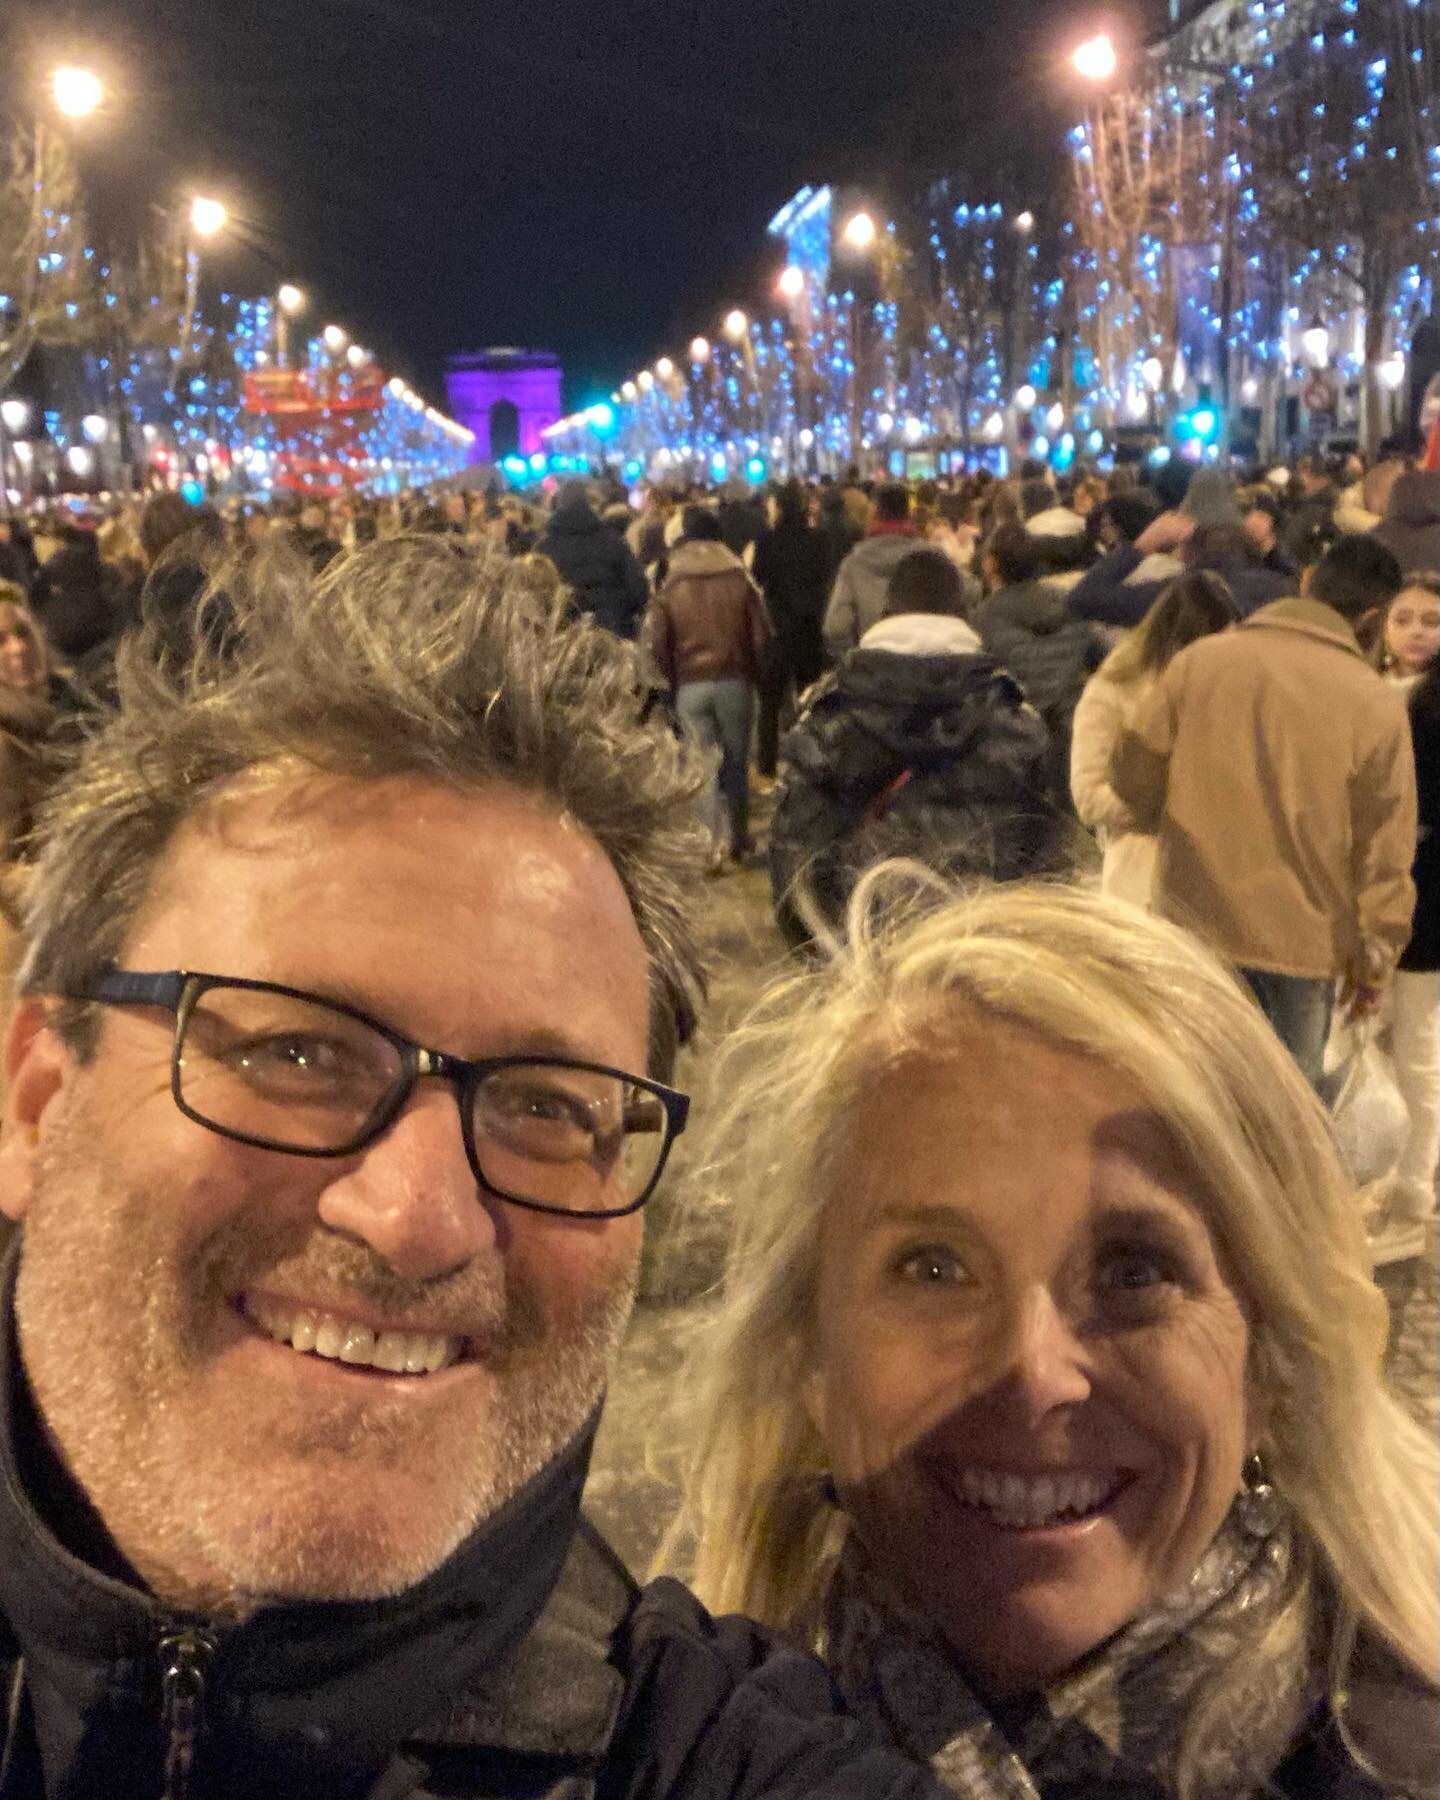 Happy New Year from a sea of 1 million people on the Champs &Eacute;lys&eacute;es! Living the dream with @fiona.kilponen &lsquo;Ooh la la&hellip;magnifique! 😂🇫🇷🥂
.
.
. 
.
. 
#paris #nye #champselysees #oohlala #magnifique